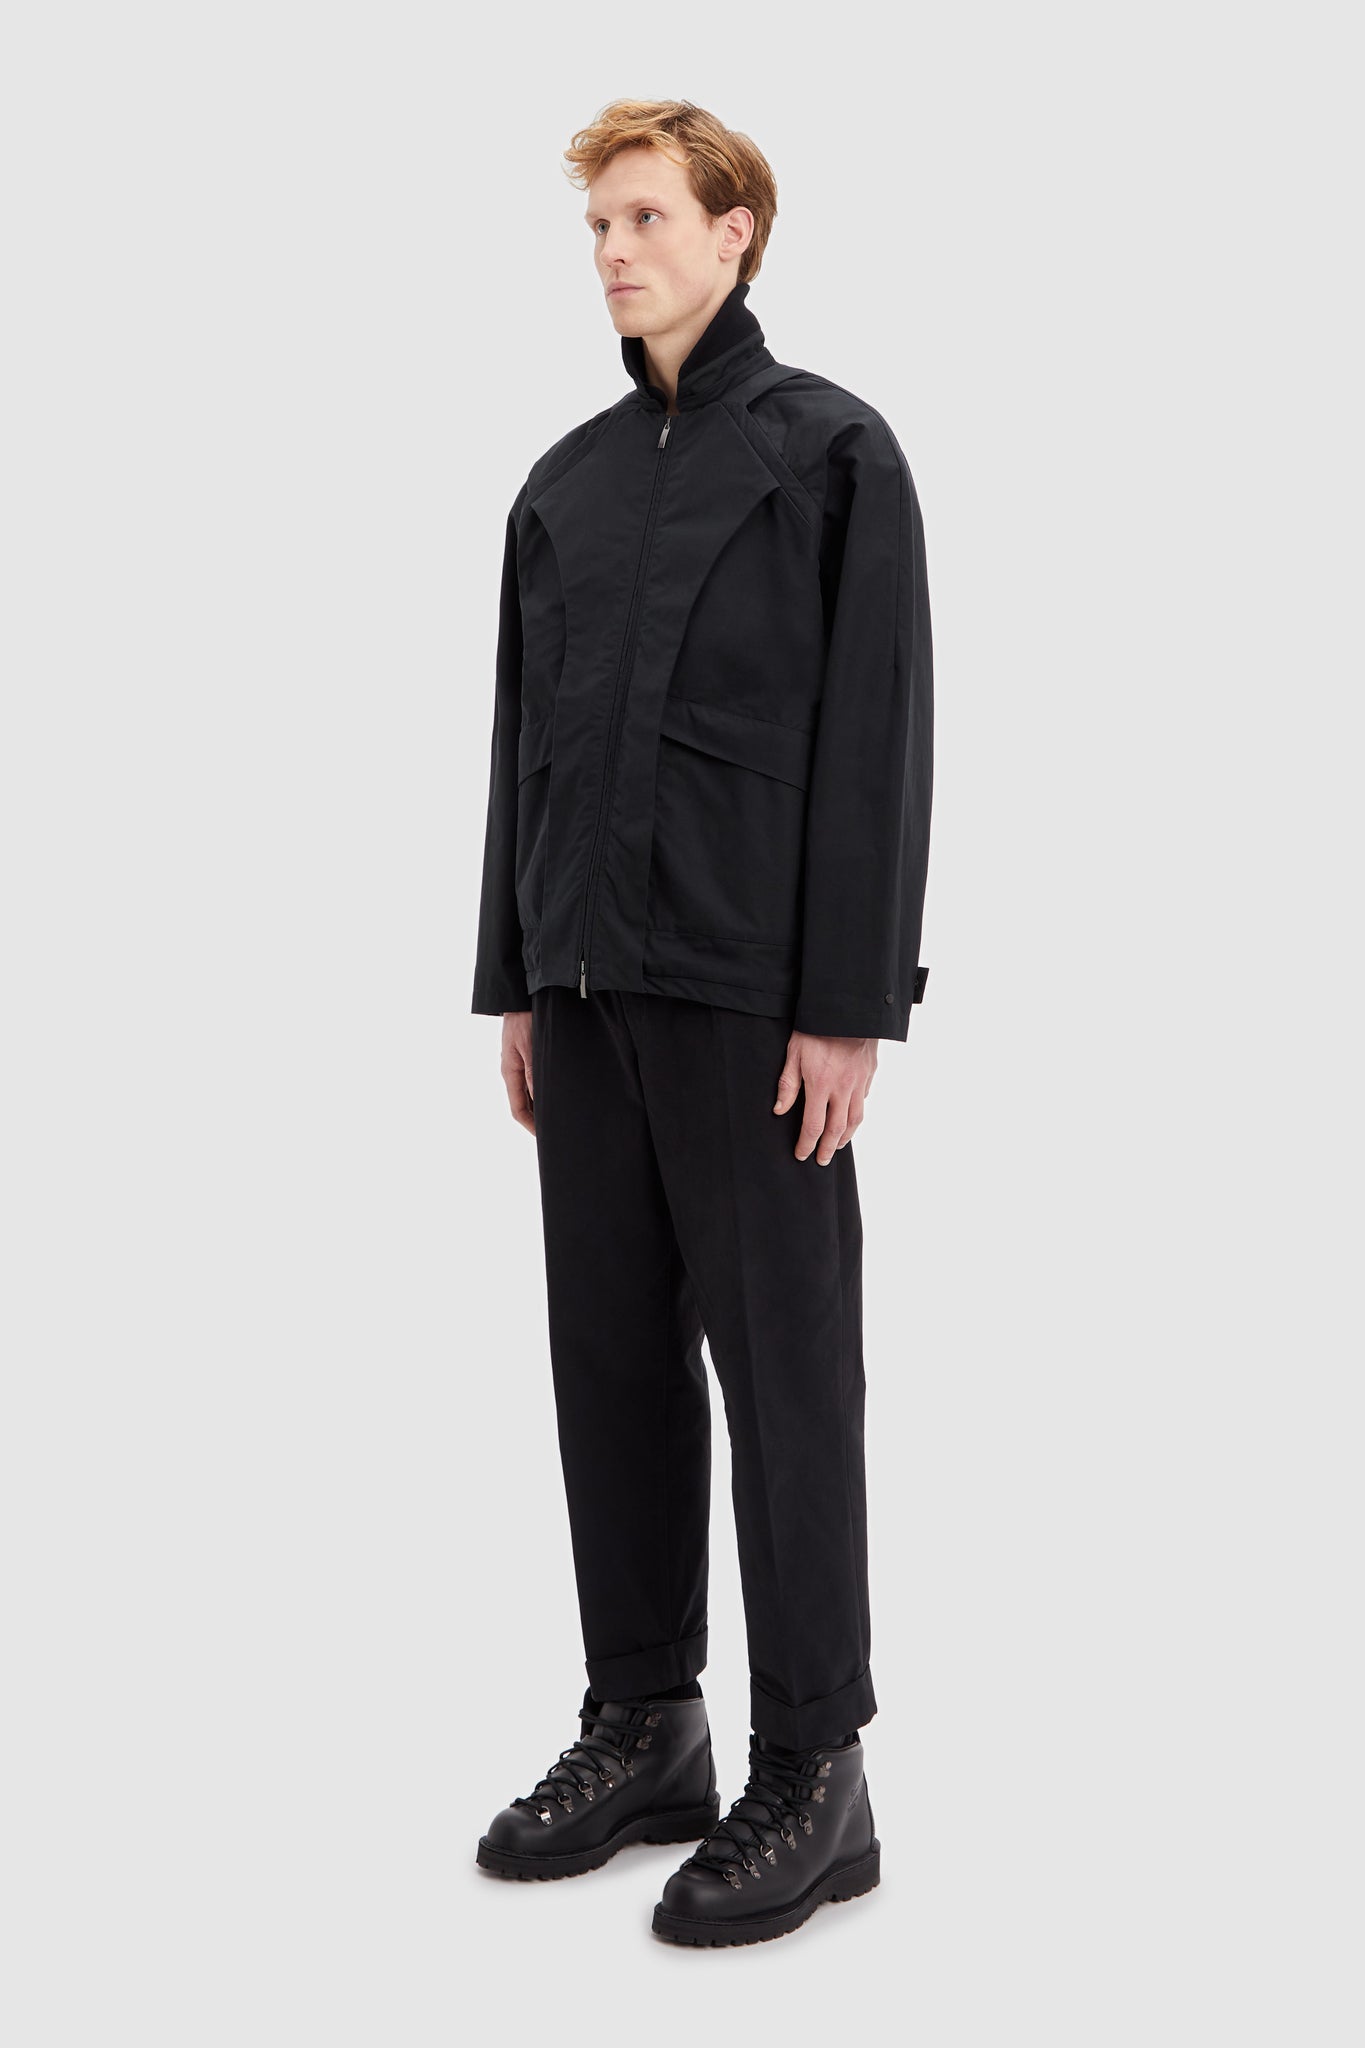 Organic Cotton Jacket in Colour black 45 degree